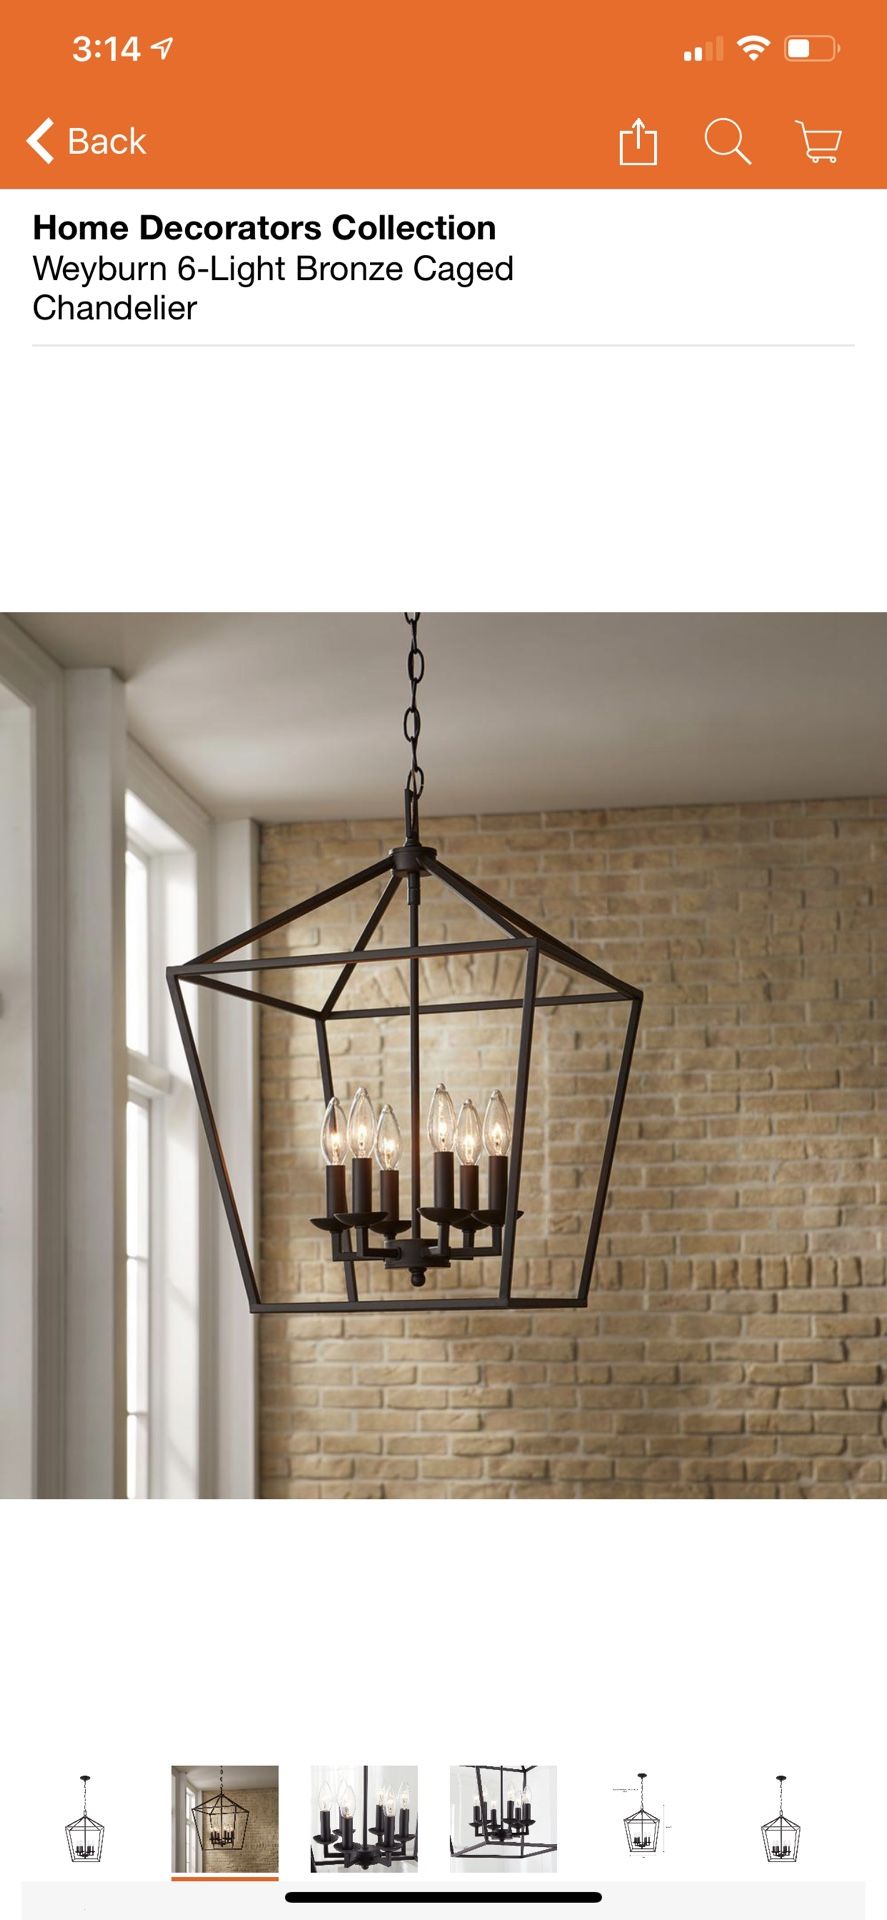 Home Decorators Collection Weyburn 6-Light Bronze Caged Chandelier